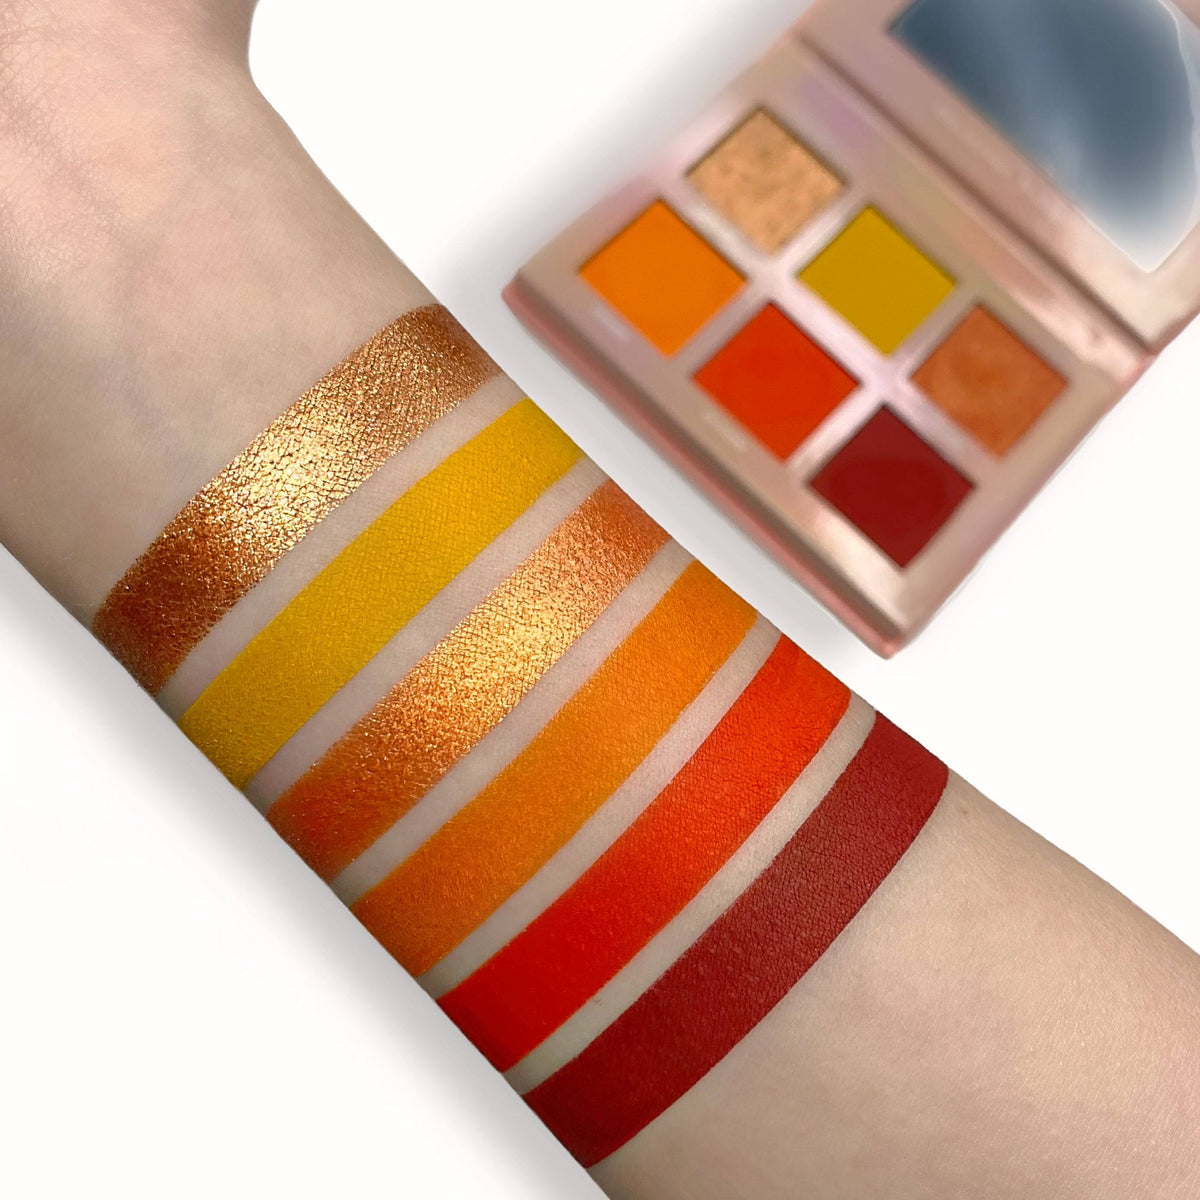 Sunset Chic Pigment Palette - Coloured Raine Cosmetics